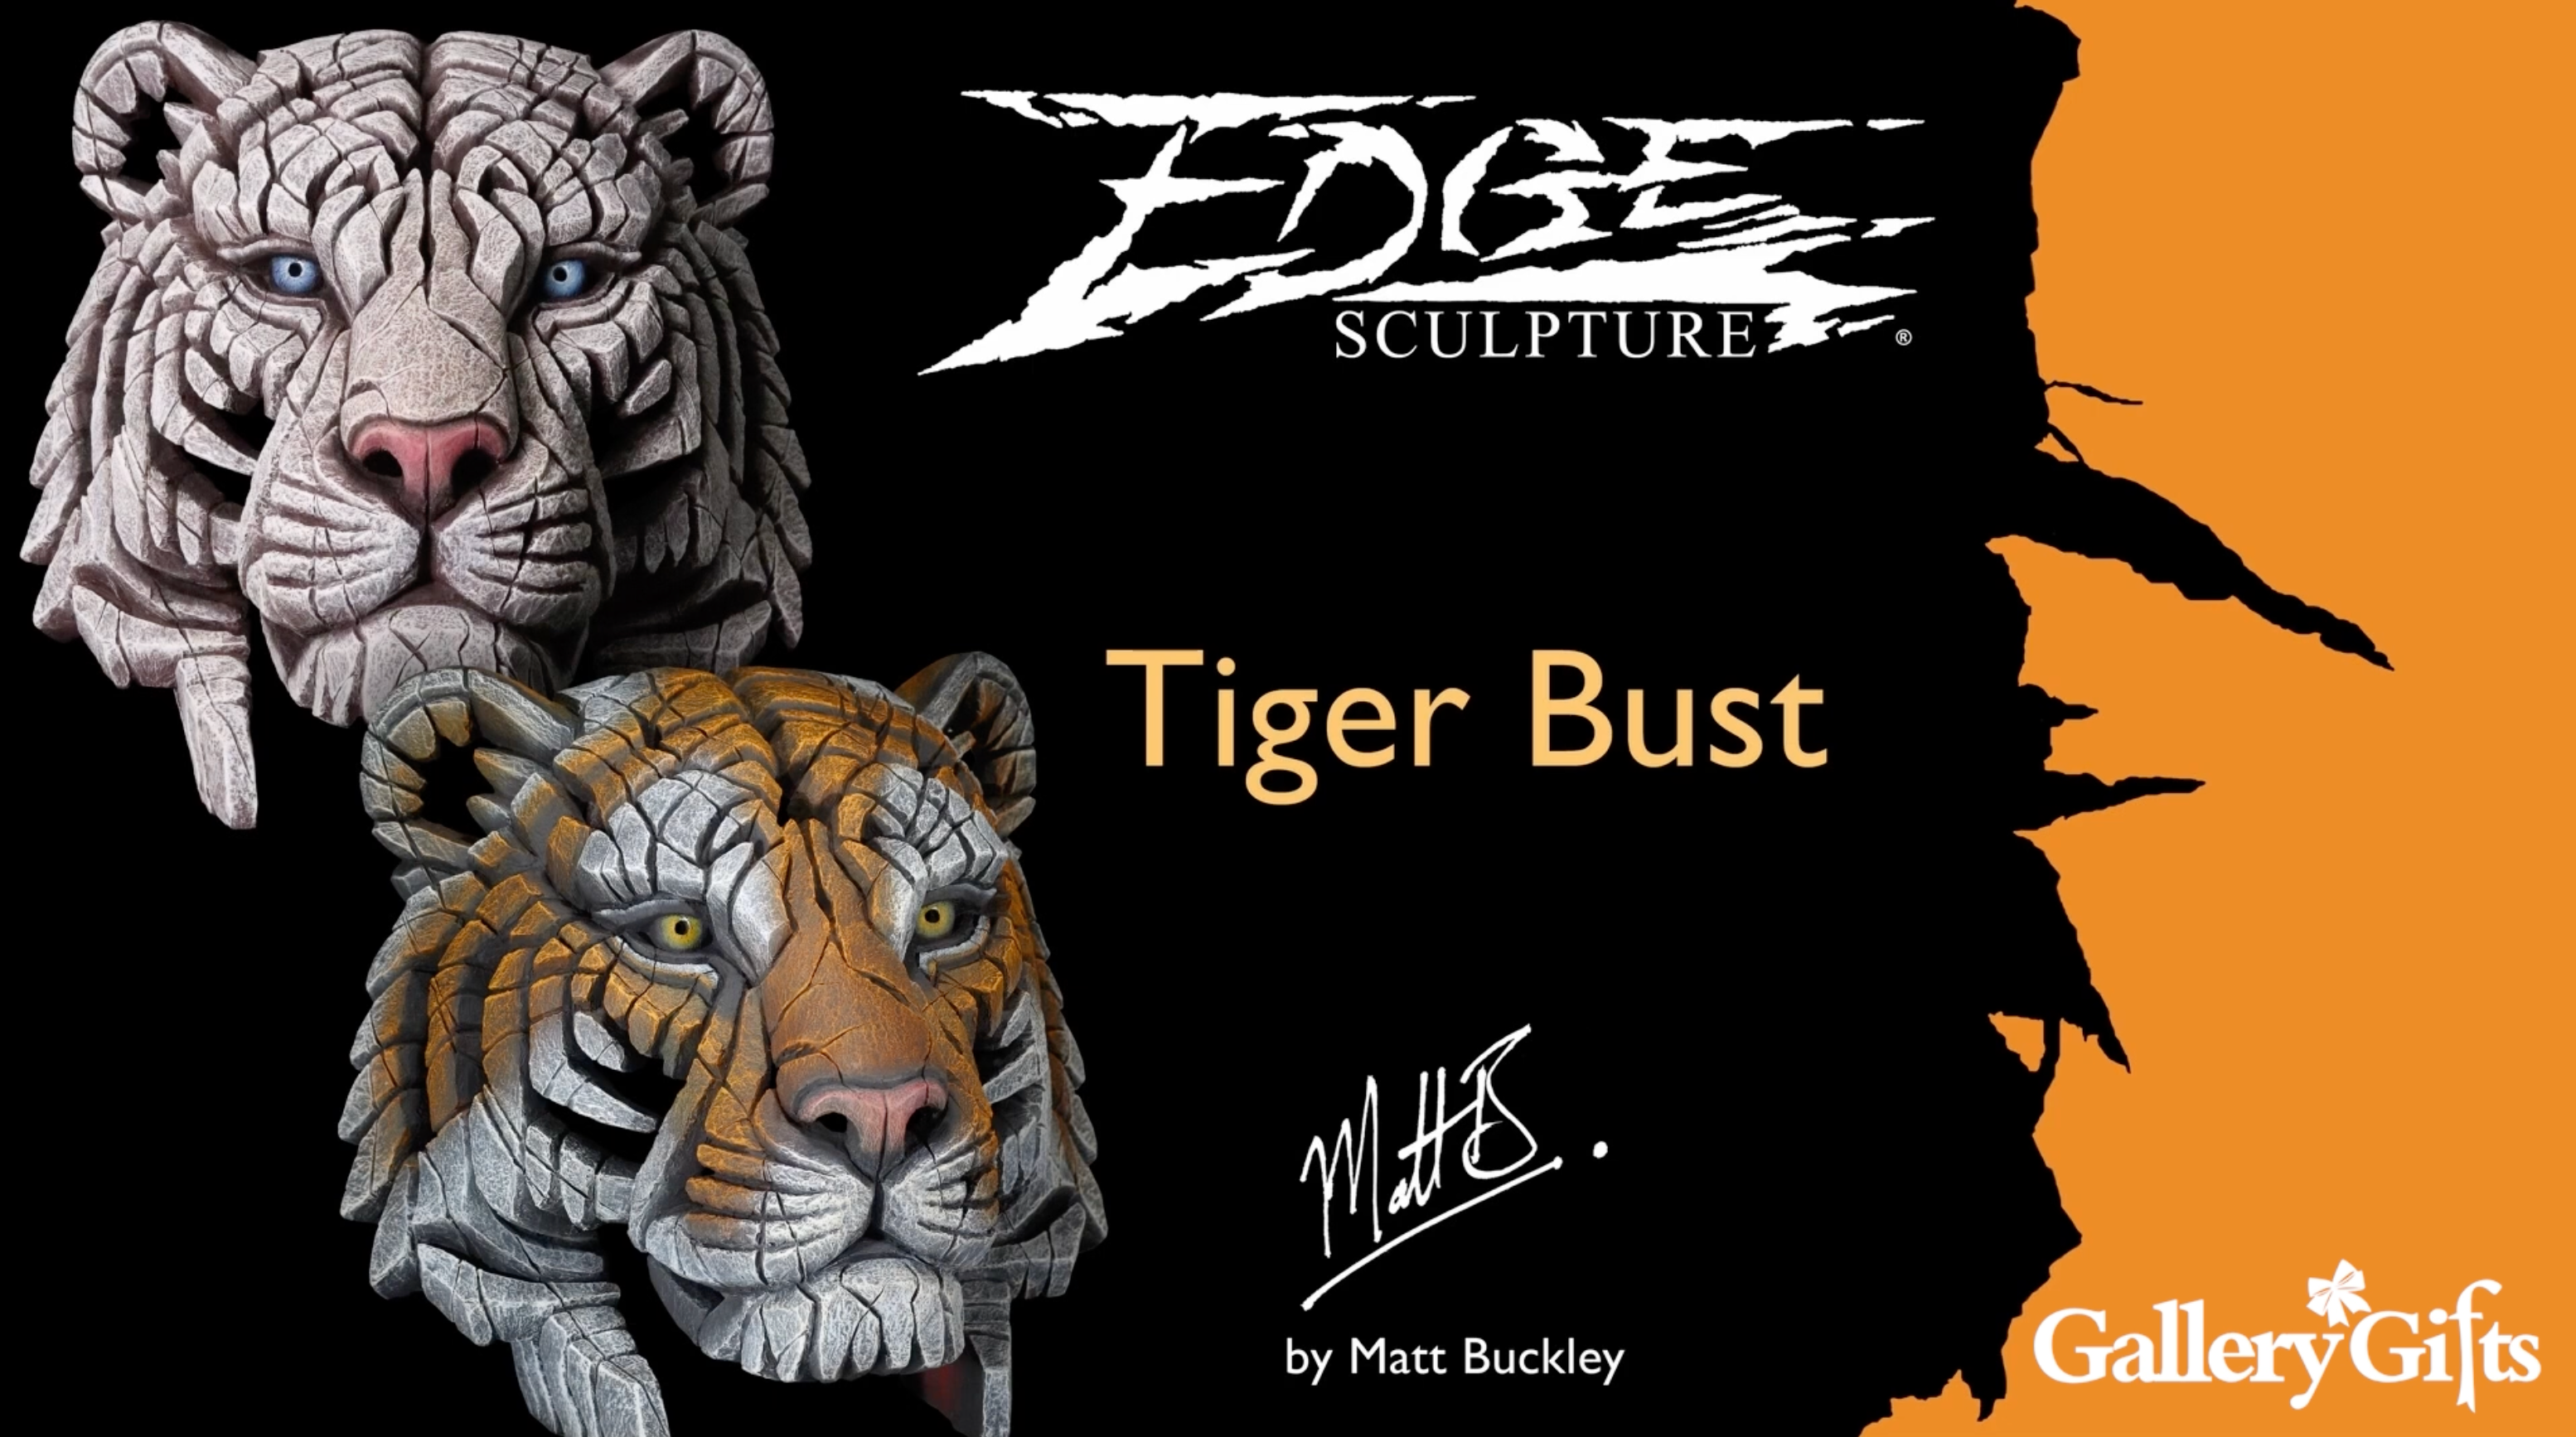 Load video: Edge Sculpture by Matt Buckley - Tiger Bust - Gallery Gifts Online